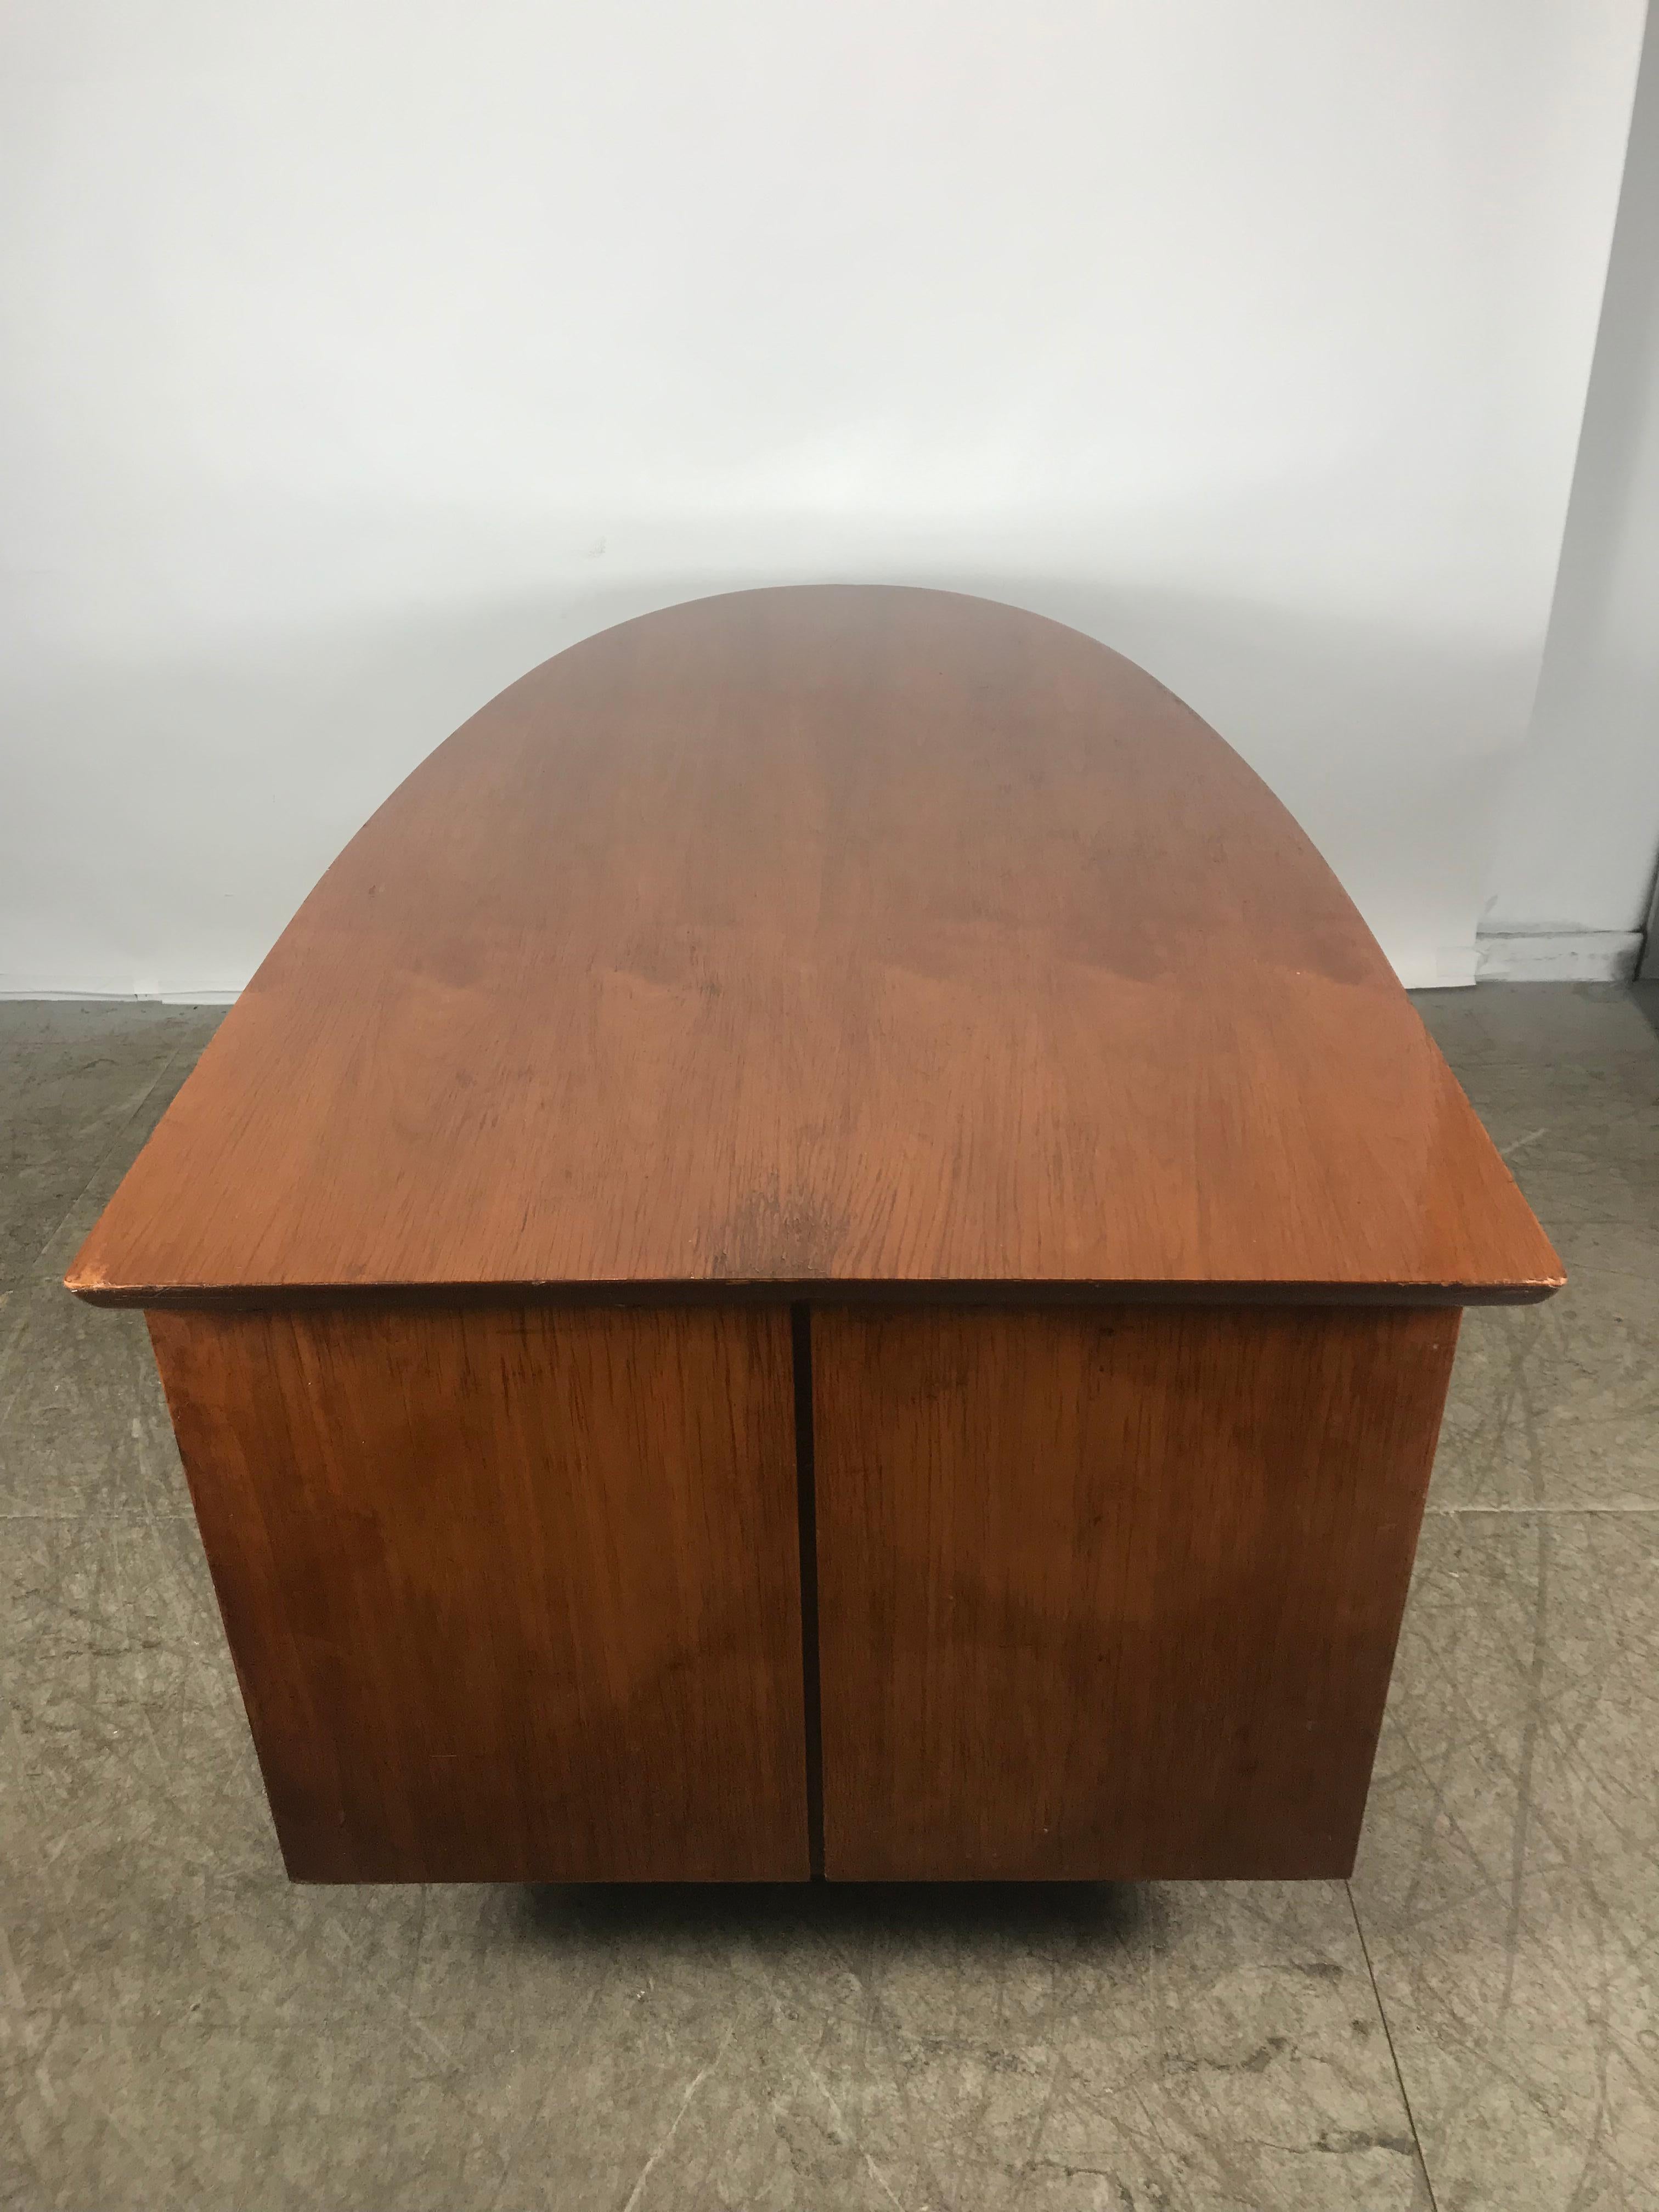 Unusual half oval shaped walnut partners desk by Miller Desk & Safe Co, half oval top, caned modesty panel, striking metal 